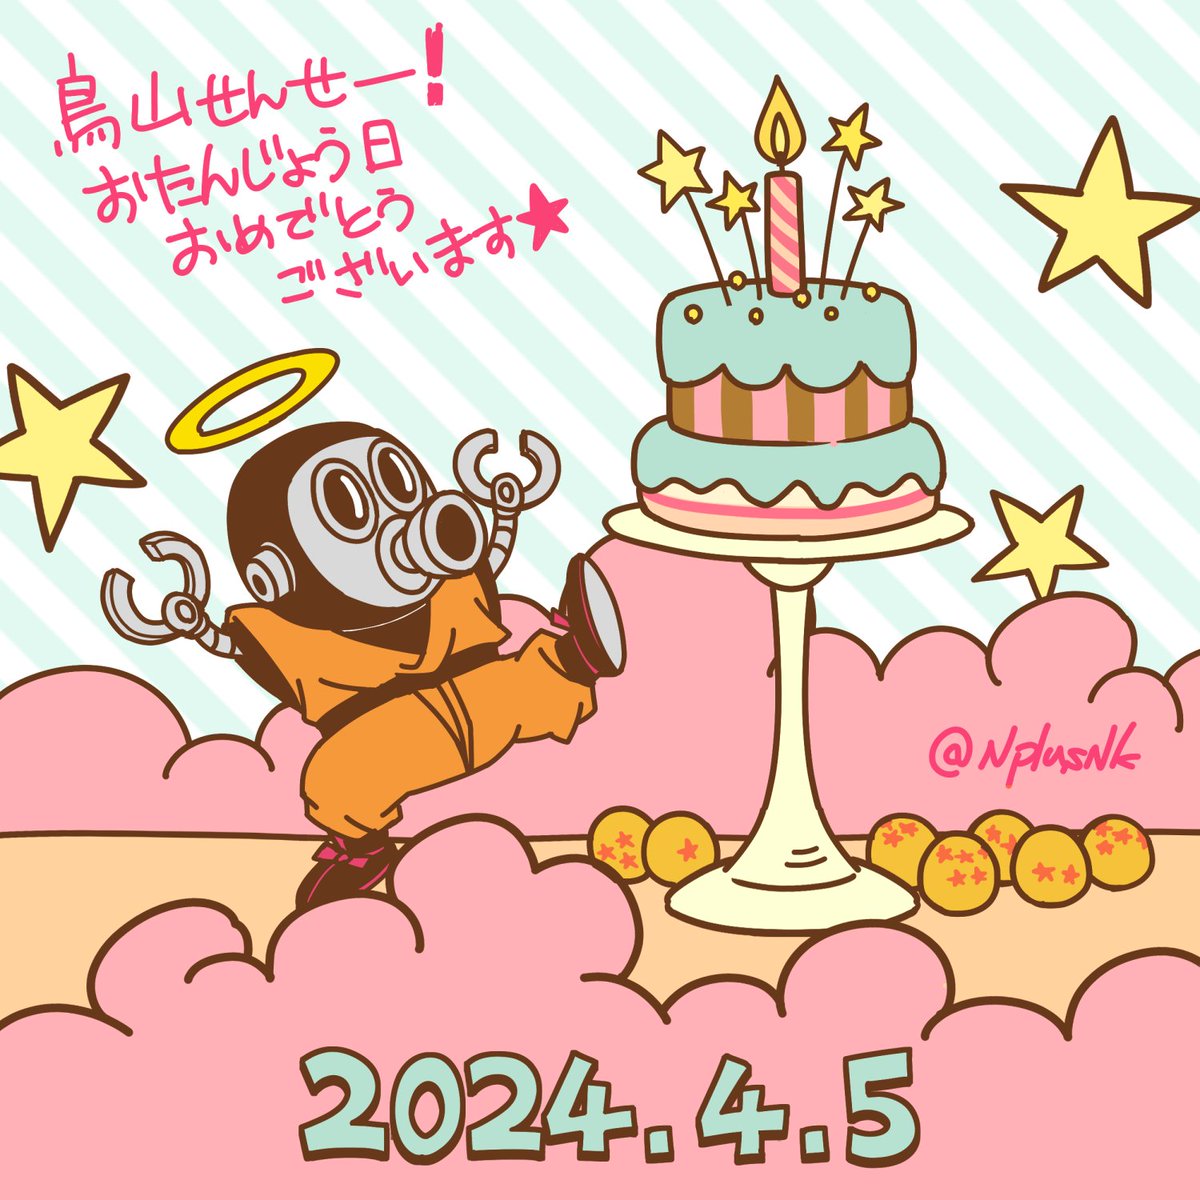 Happy Birthday, Toriyama-sensei!
鳥山先生お誕生日おめでとうございます🎂✨
わたしもちょうどついこの前誕生日でした、同じ4月生まれでうれしいです⭐️

#鳥山明生誕祭 #toriyamaakira #鳥山明先生ありがとう #鳥山明生誕祭2024